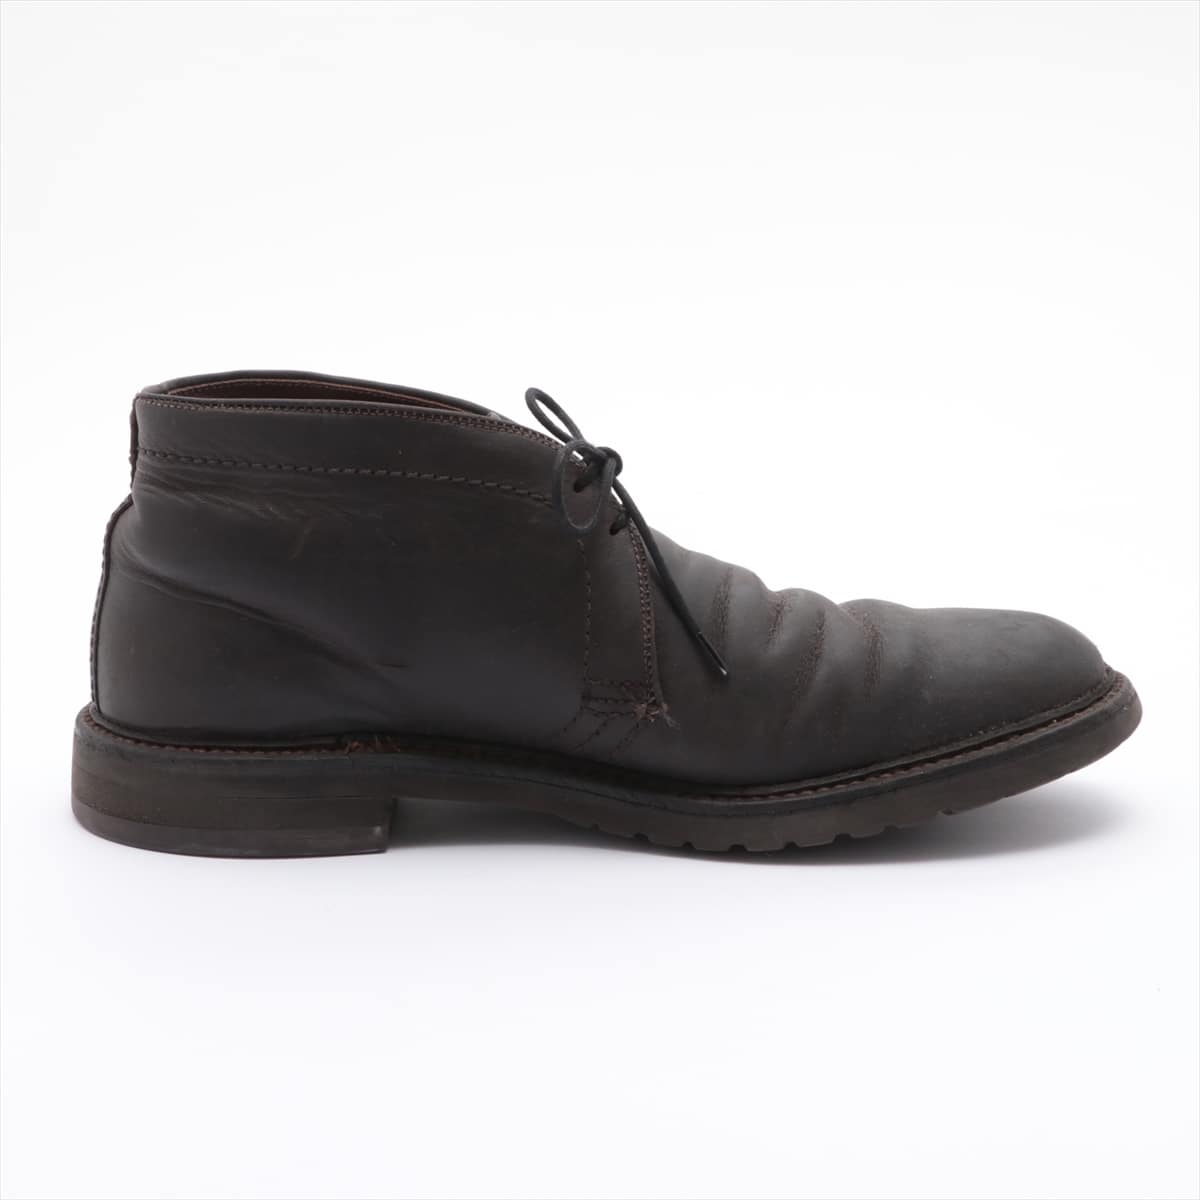 Alden Leather Chukka Boots 7 Men's Brown 12728 Oiled Chukka Boots